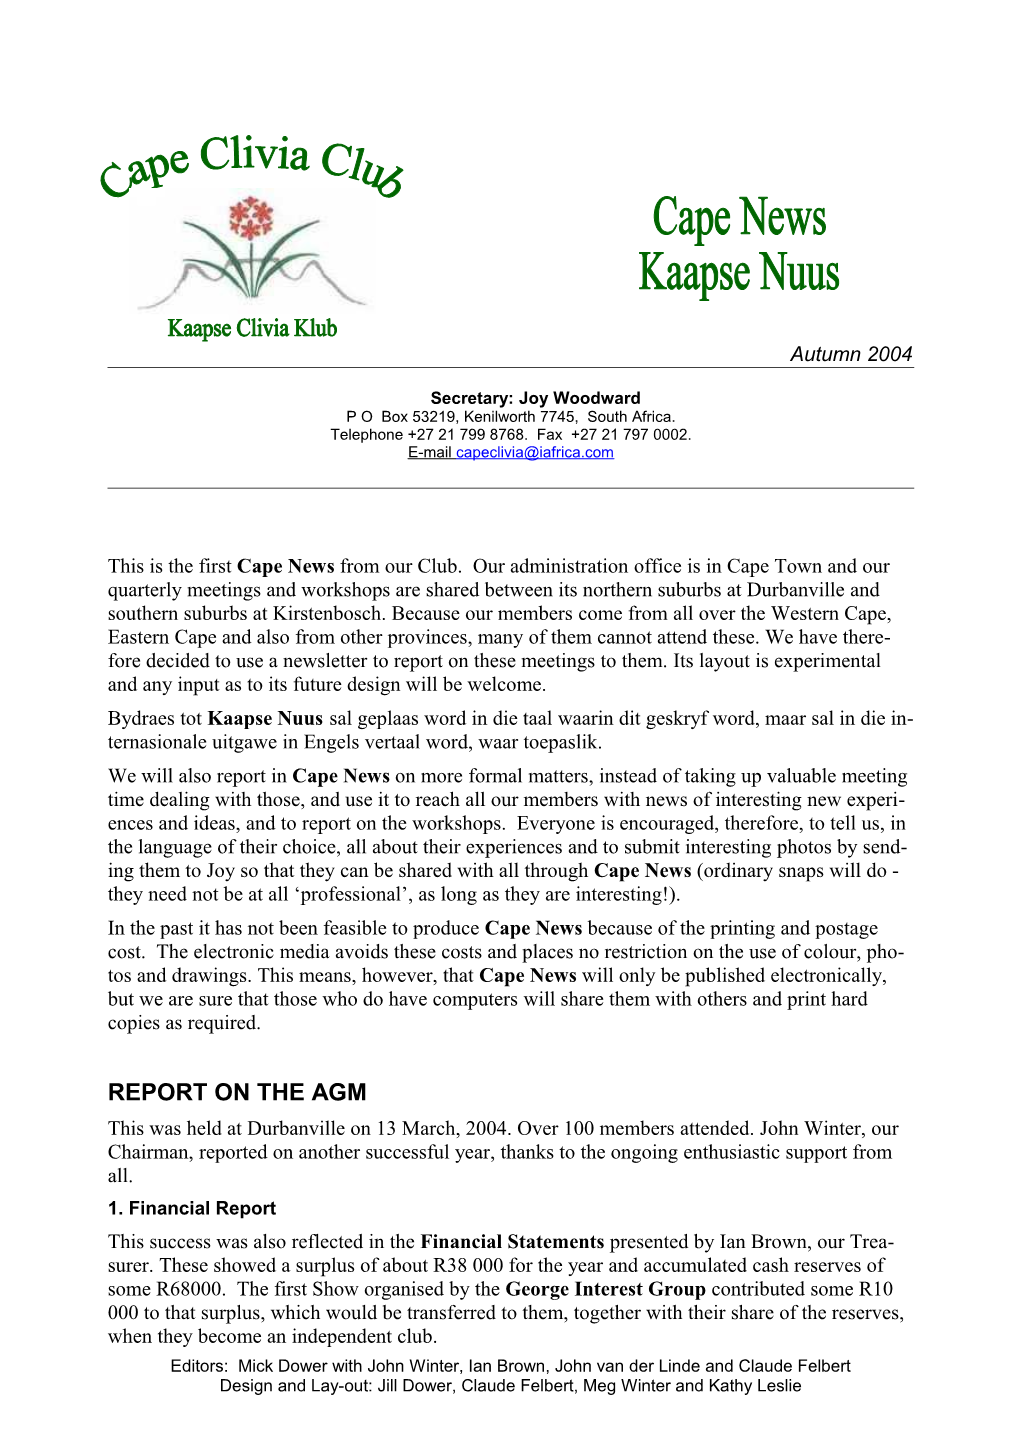 Cape Clivia Club Newsletter